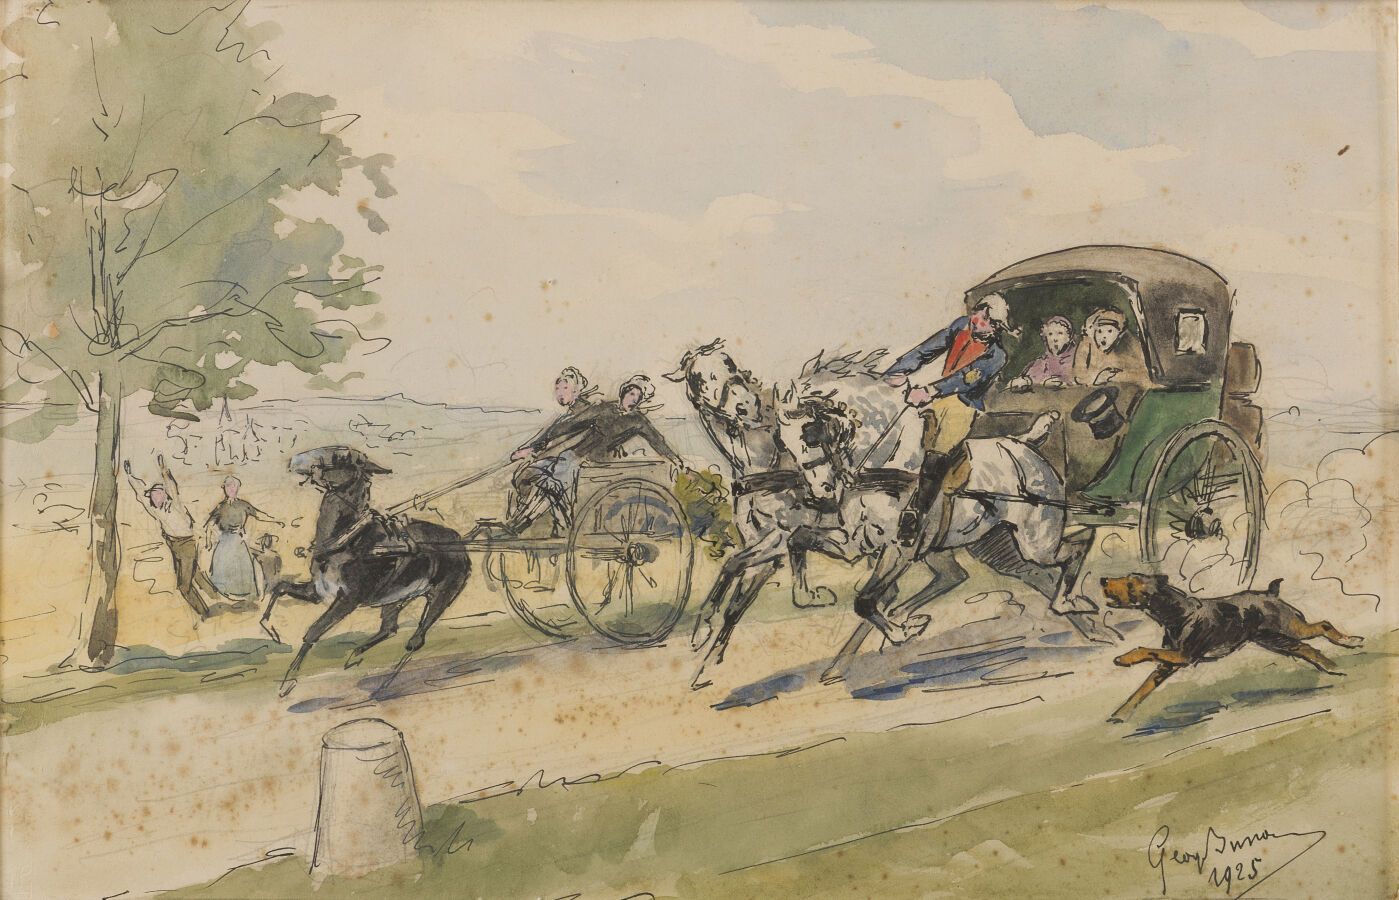 Null 乔治-布桑(1859-1933)

奔跑的马匹，1925年

纸上水彩画，右下方有签名和日期 "1925"。

29.5 x 47 厘米。